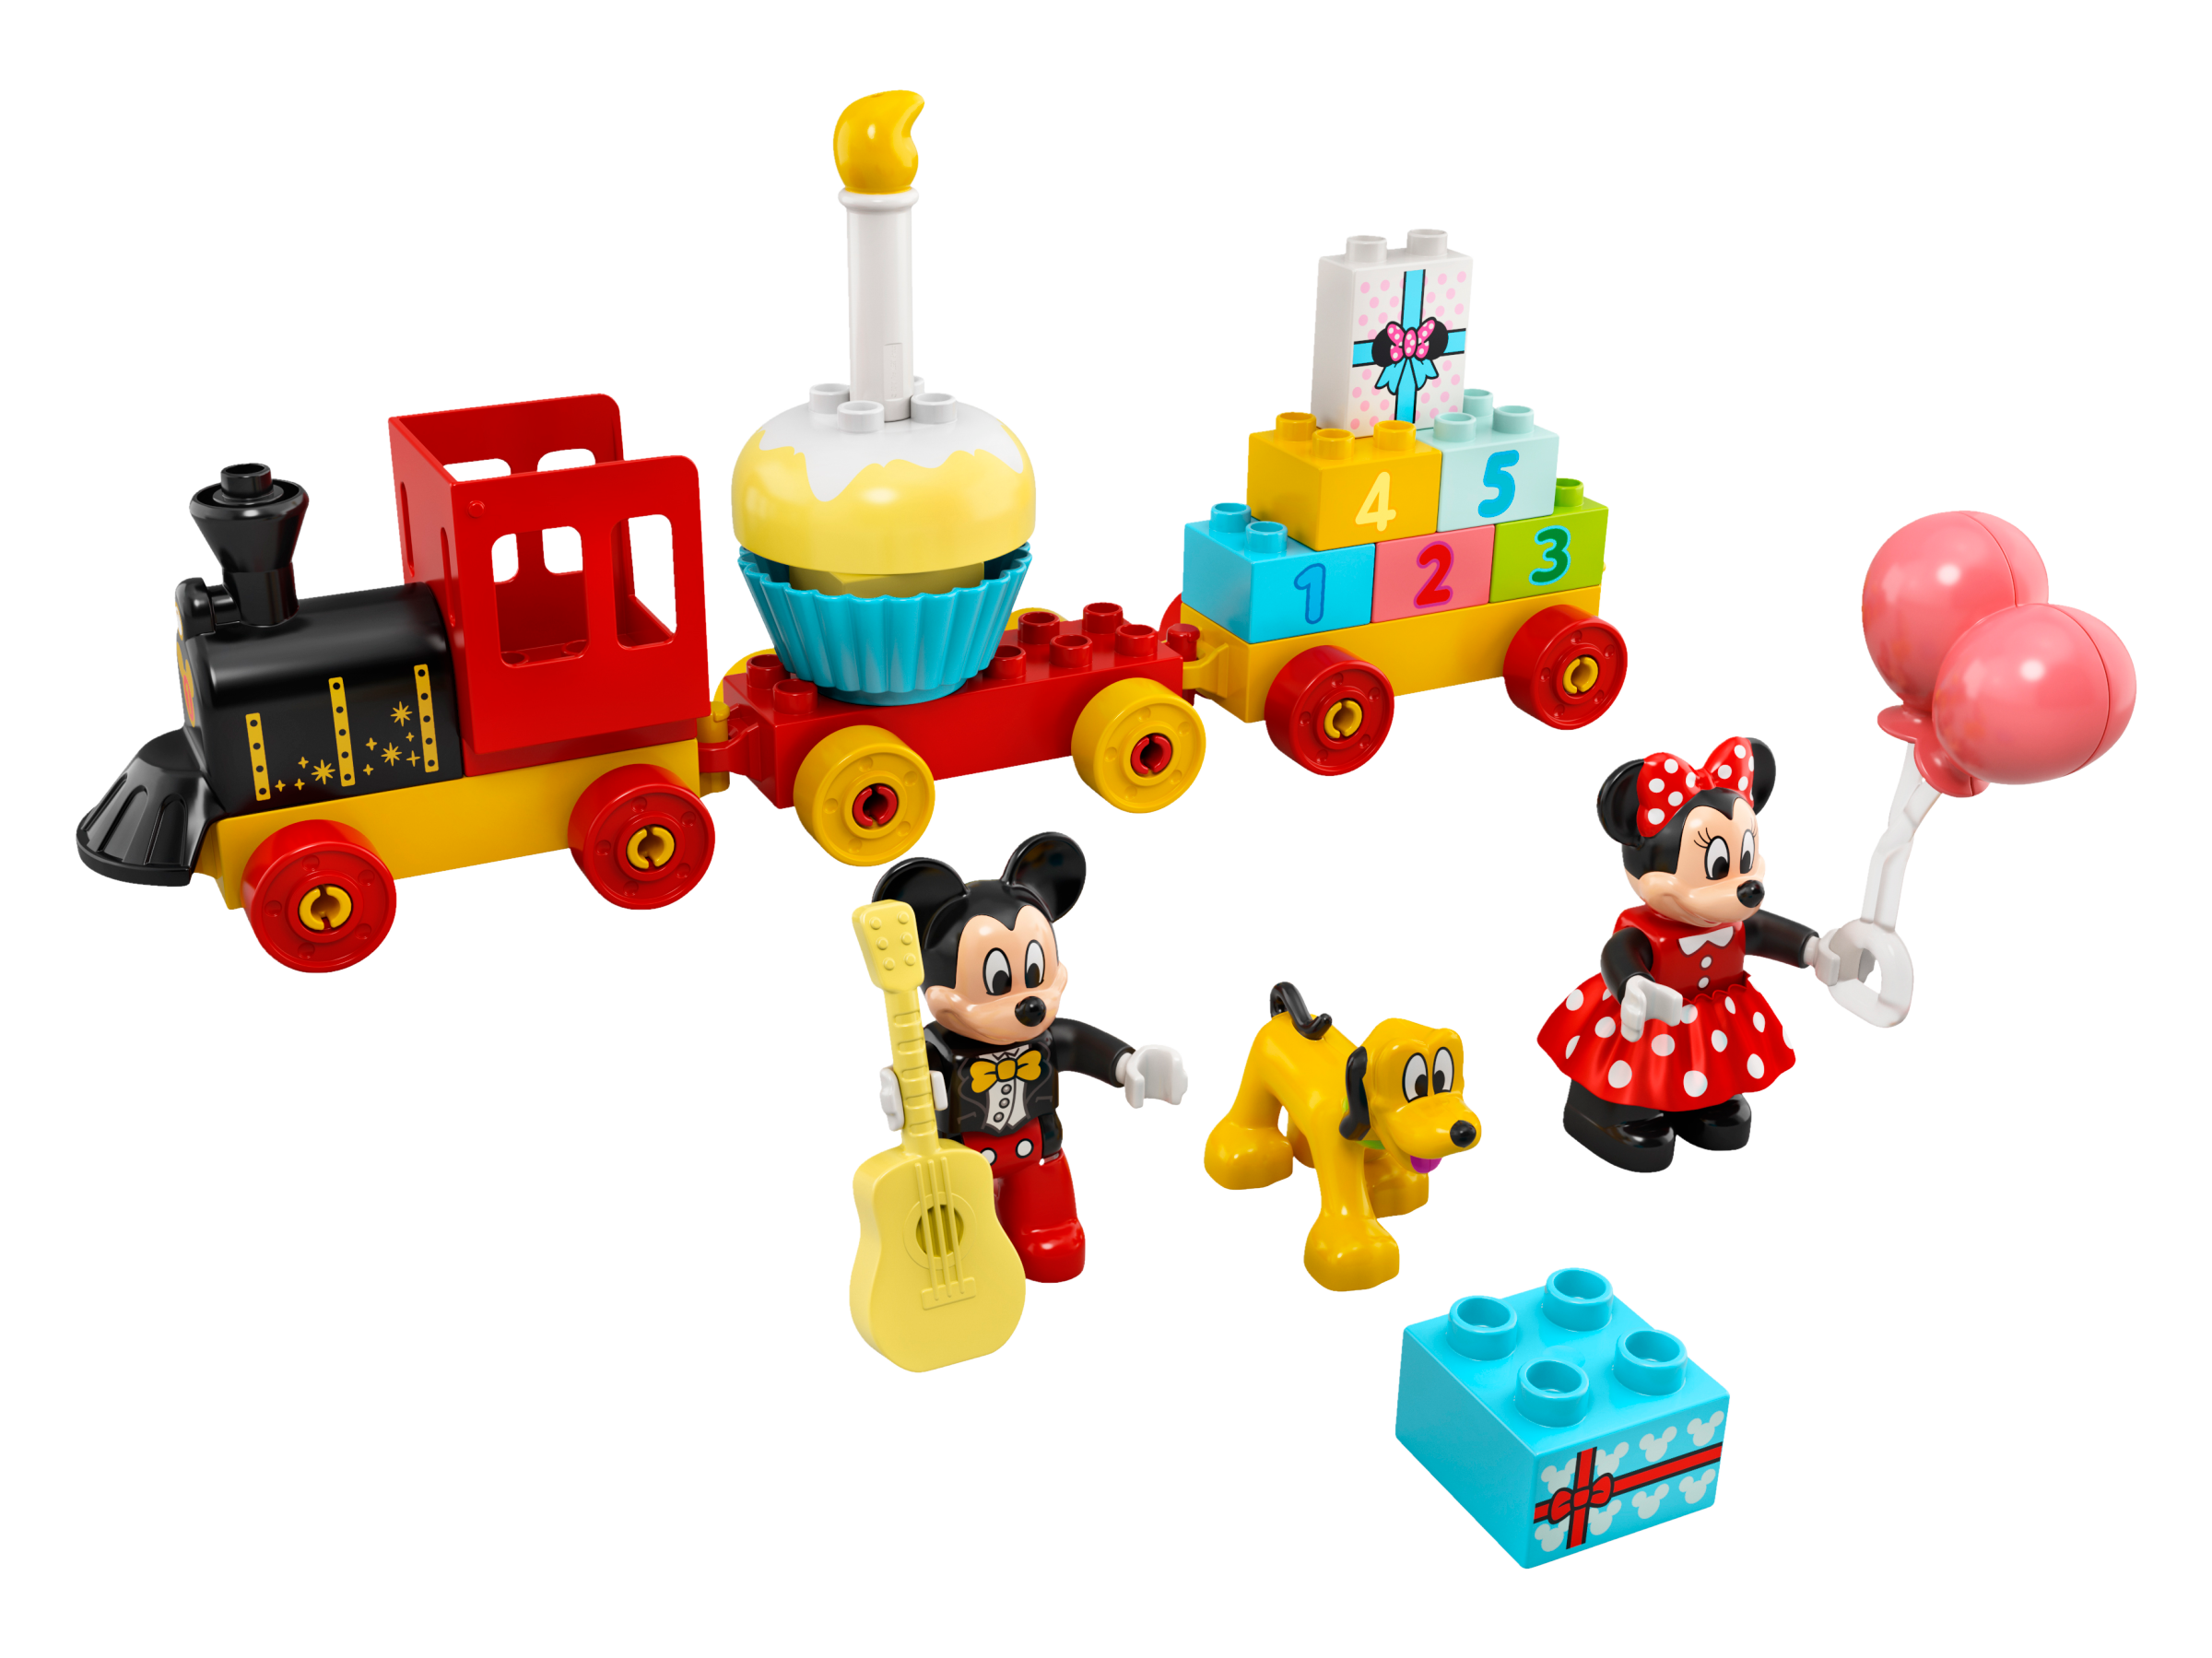 Lego 10941 Mickey & Minnie Birthday